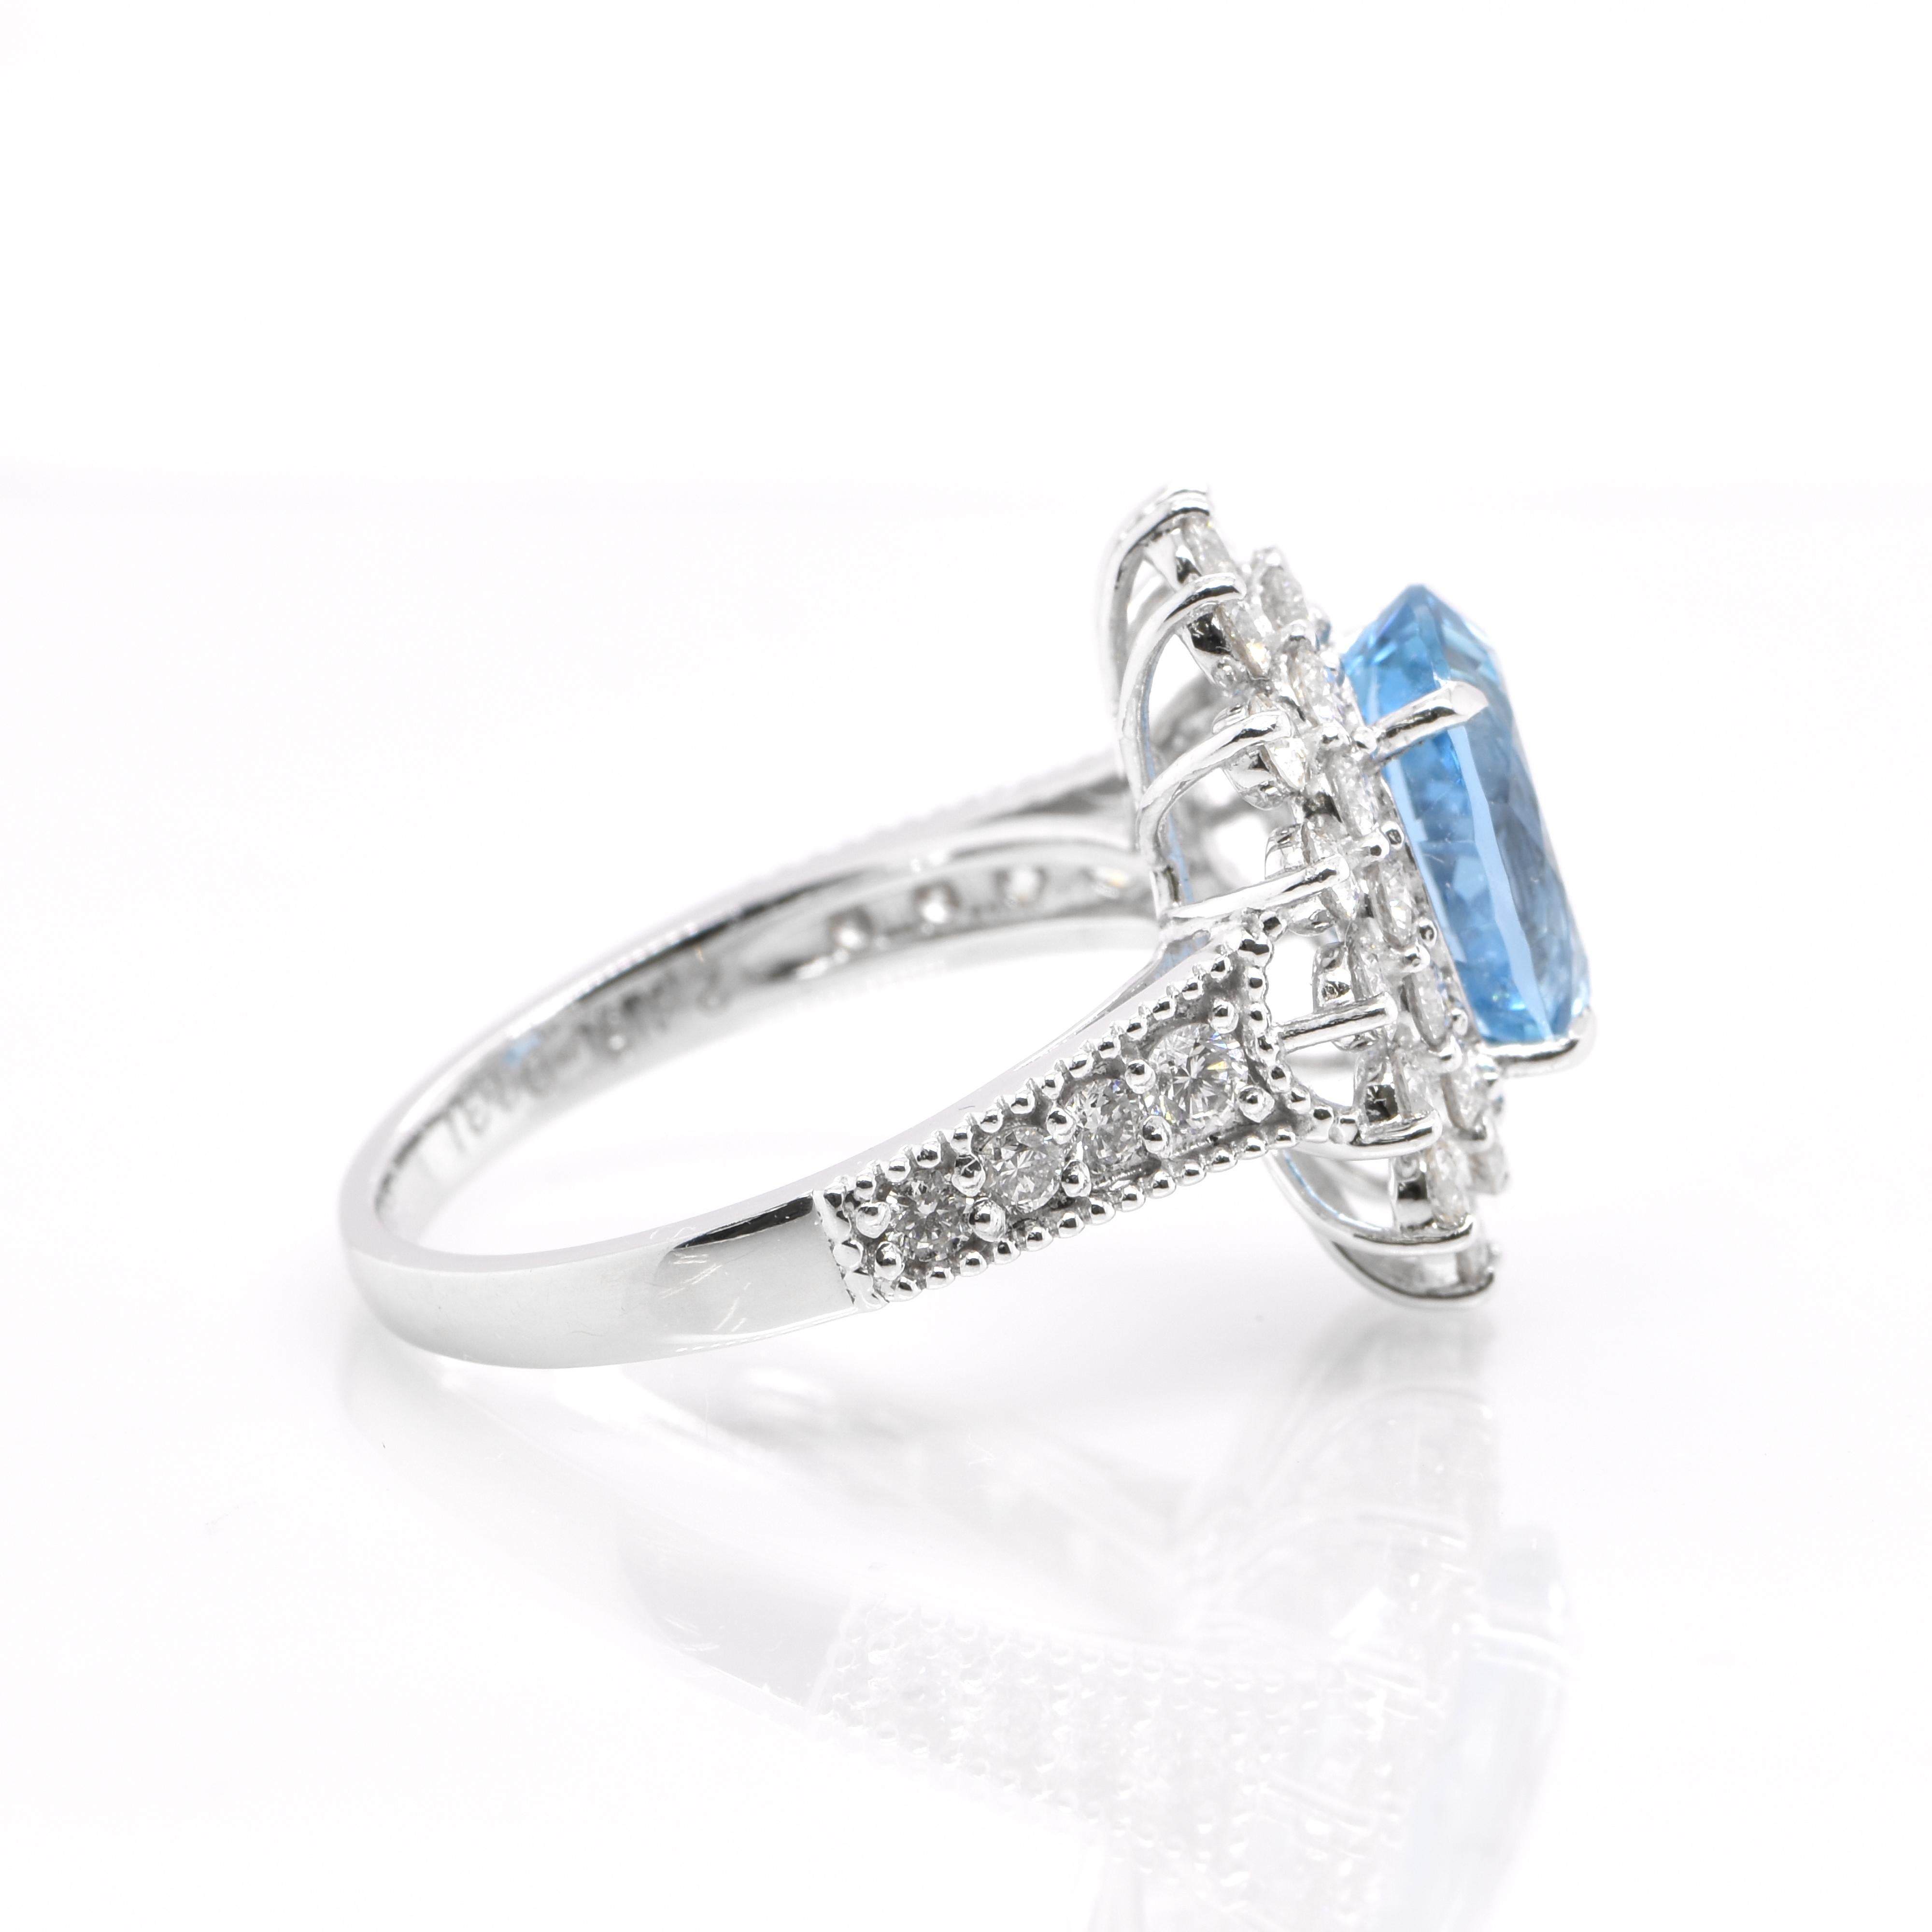 Modern 2.46 Carat, Natural, Santa-Maria Aquamarine and Diamond Ring Set in Platinum